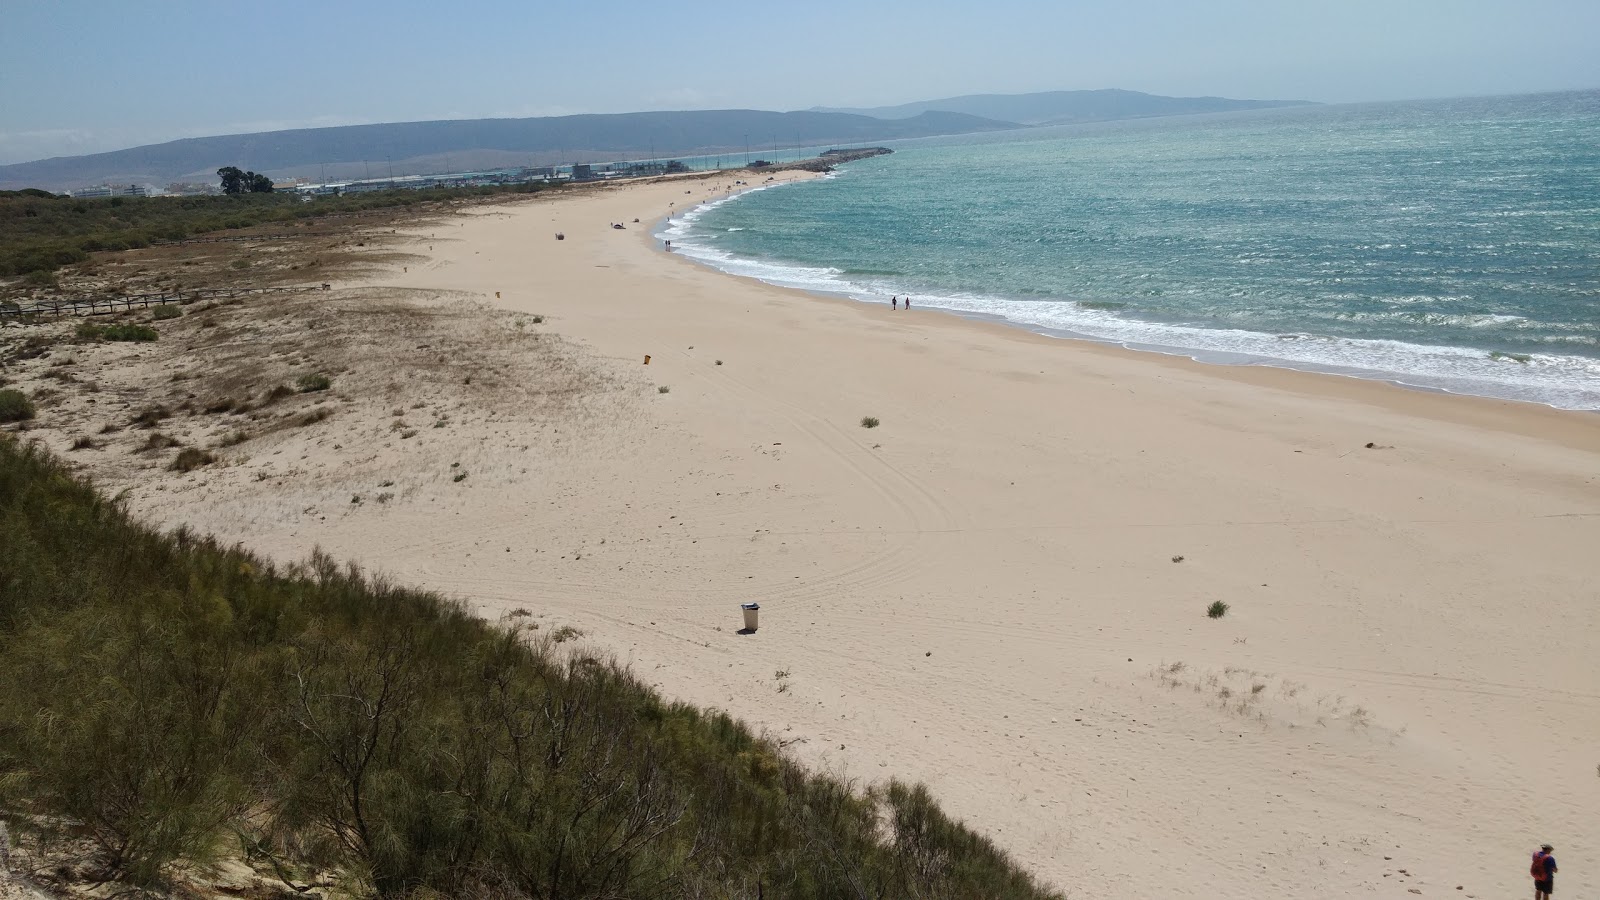 Playa de la Hierbabuena'in fotoğrafı geniş plaj ile birlikte